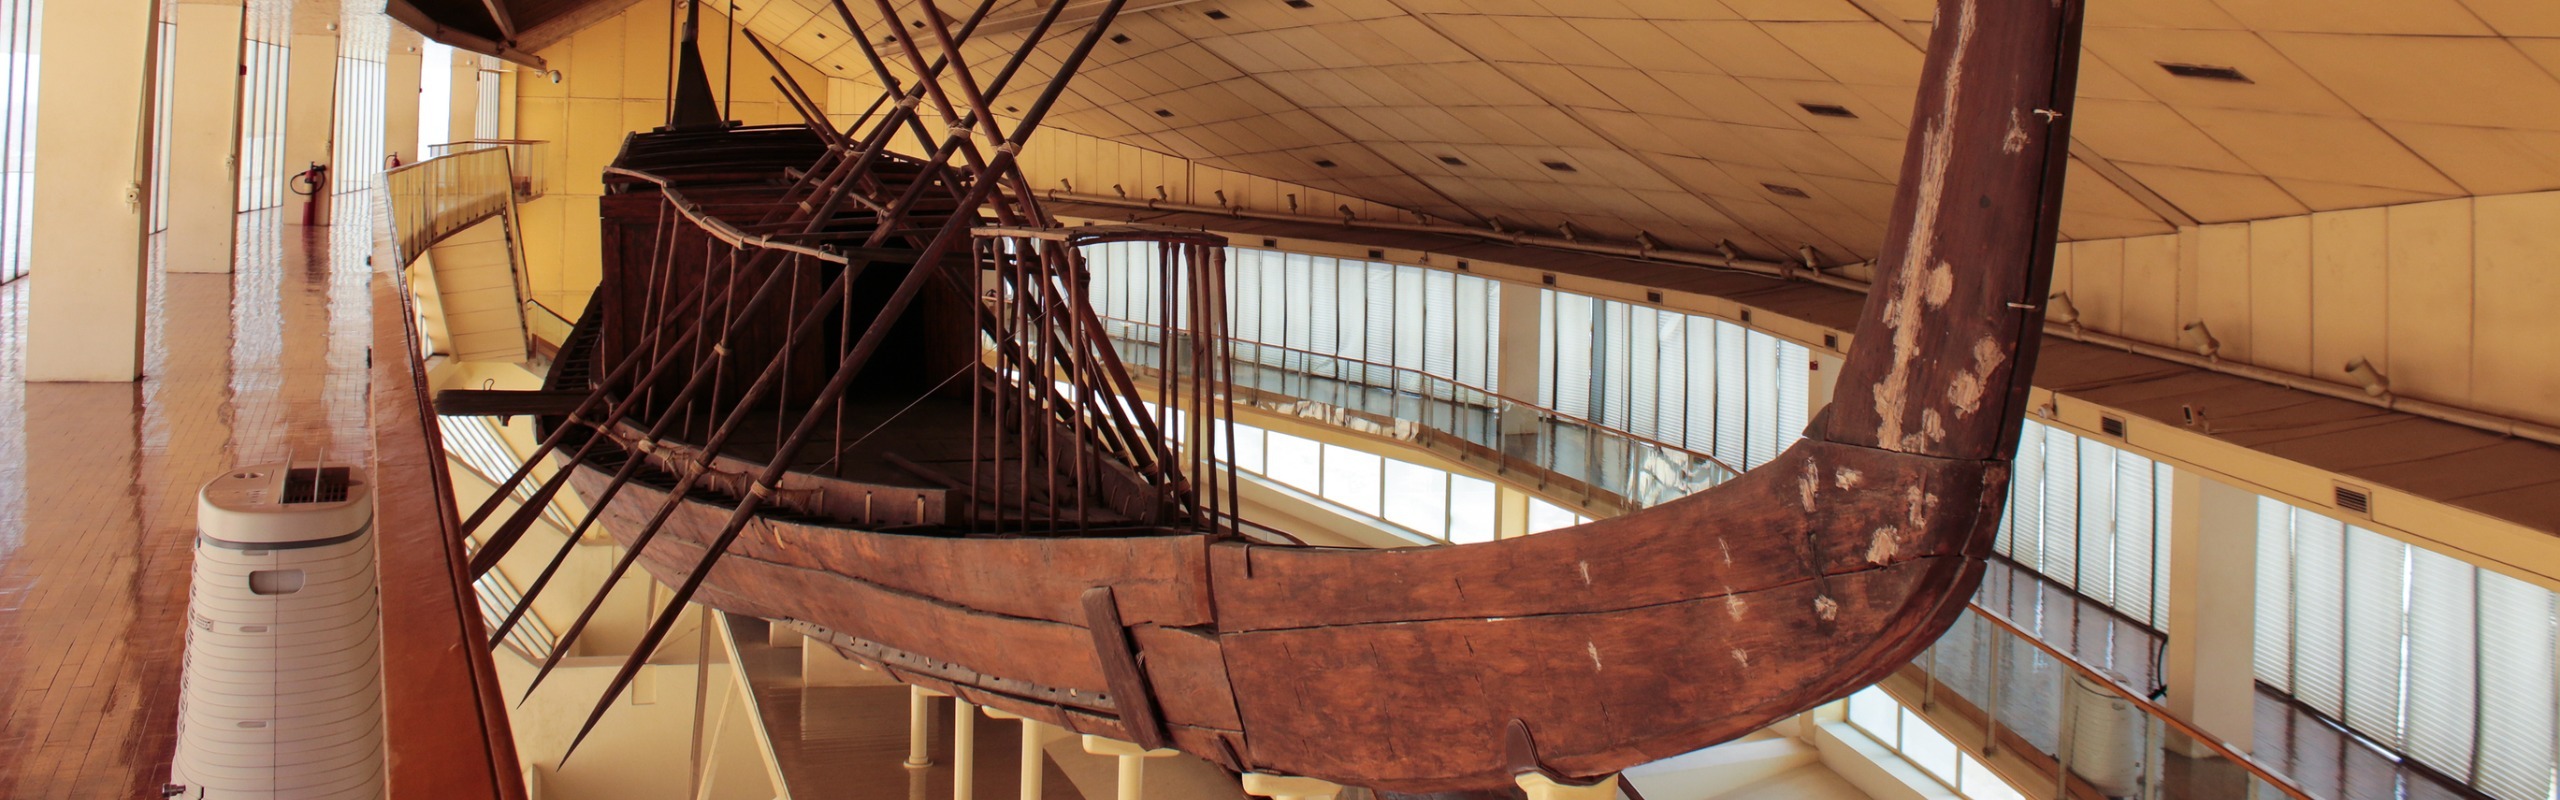 The Khufu Ship: An Ancient Solar Barque at the Pyramids of Giza